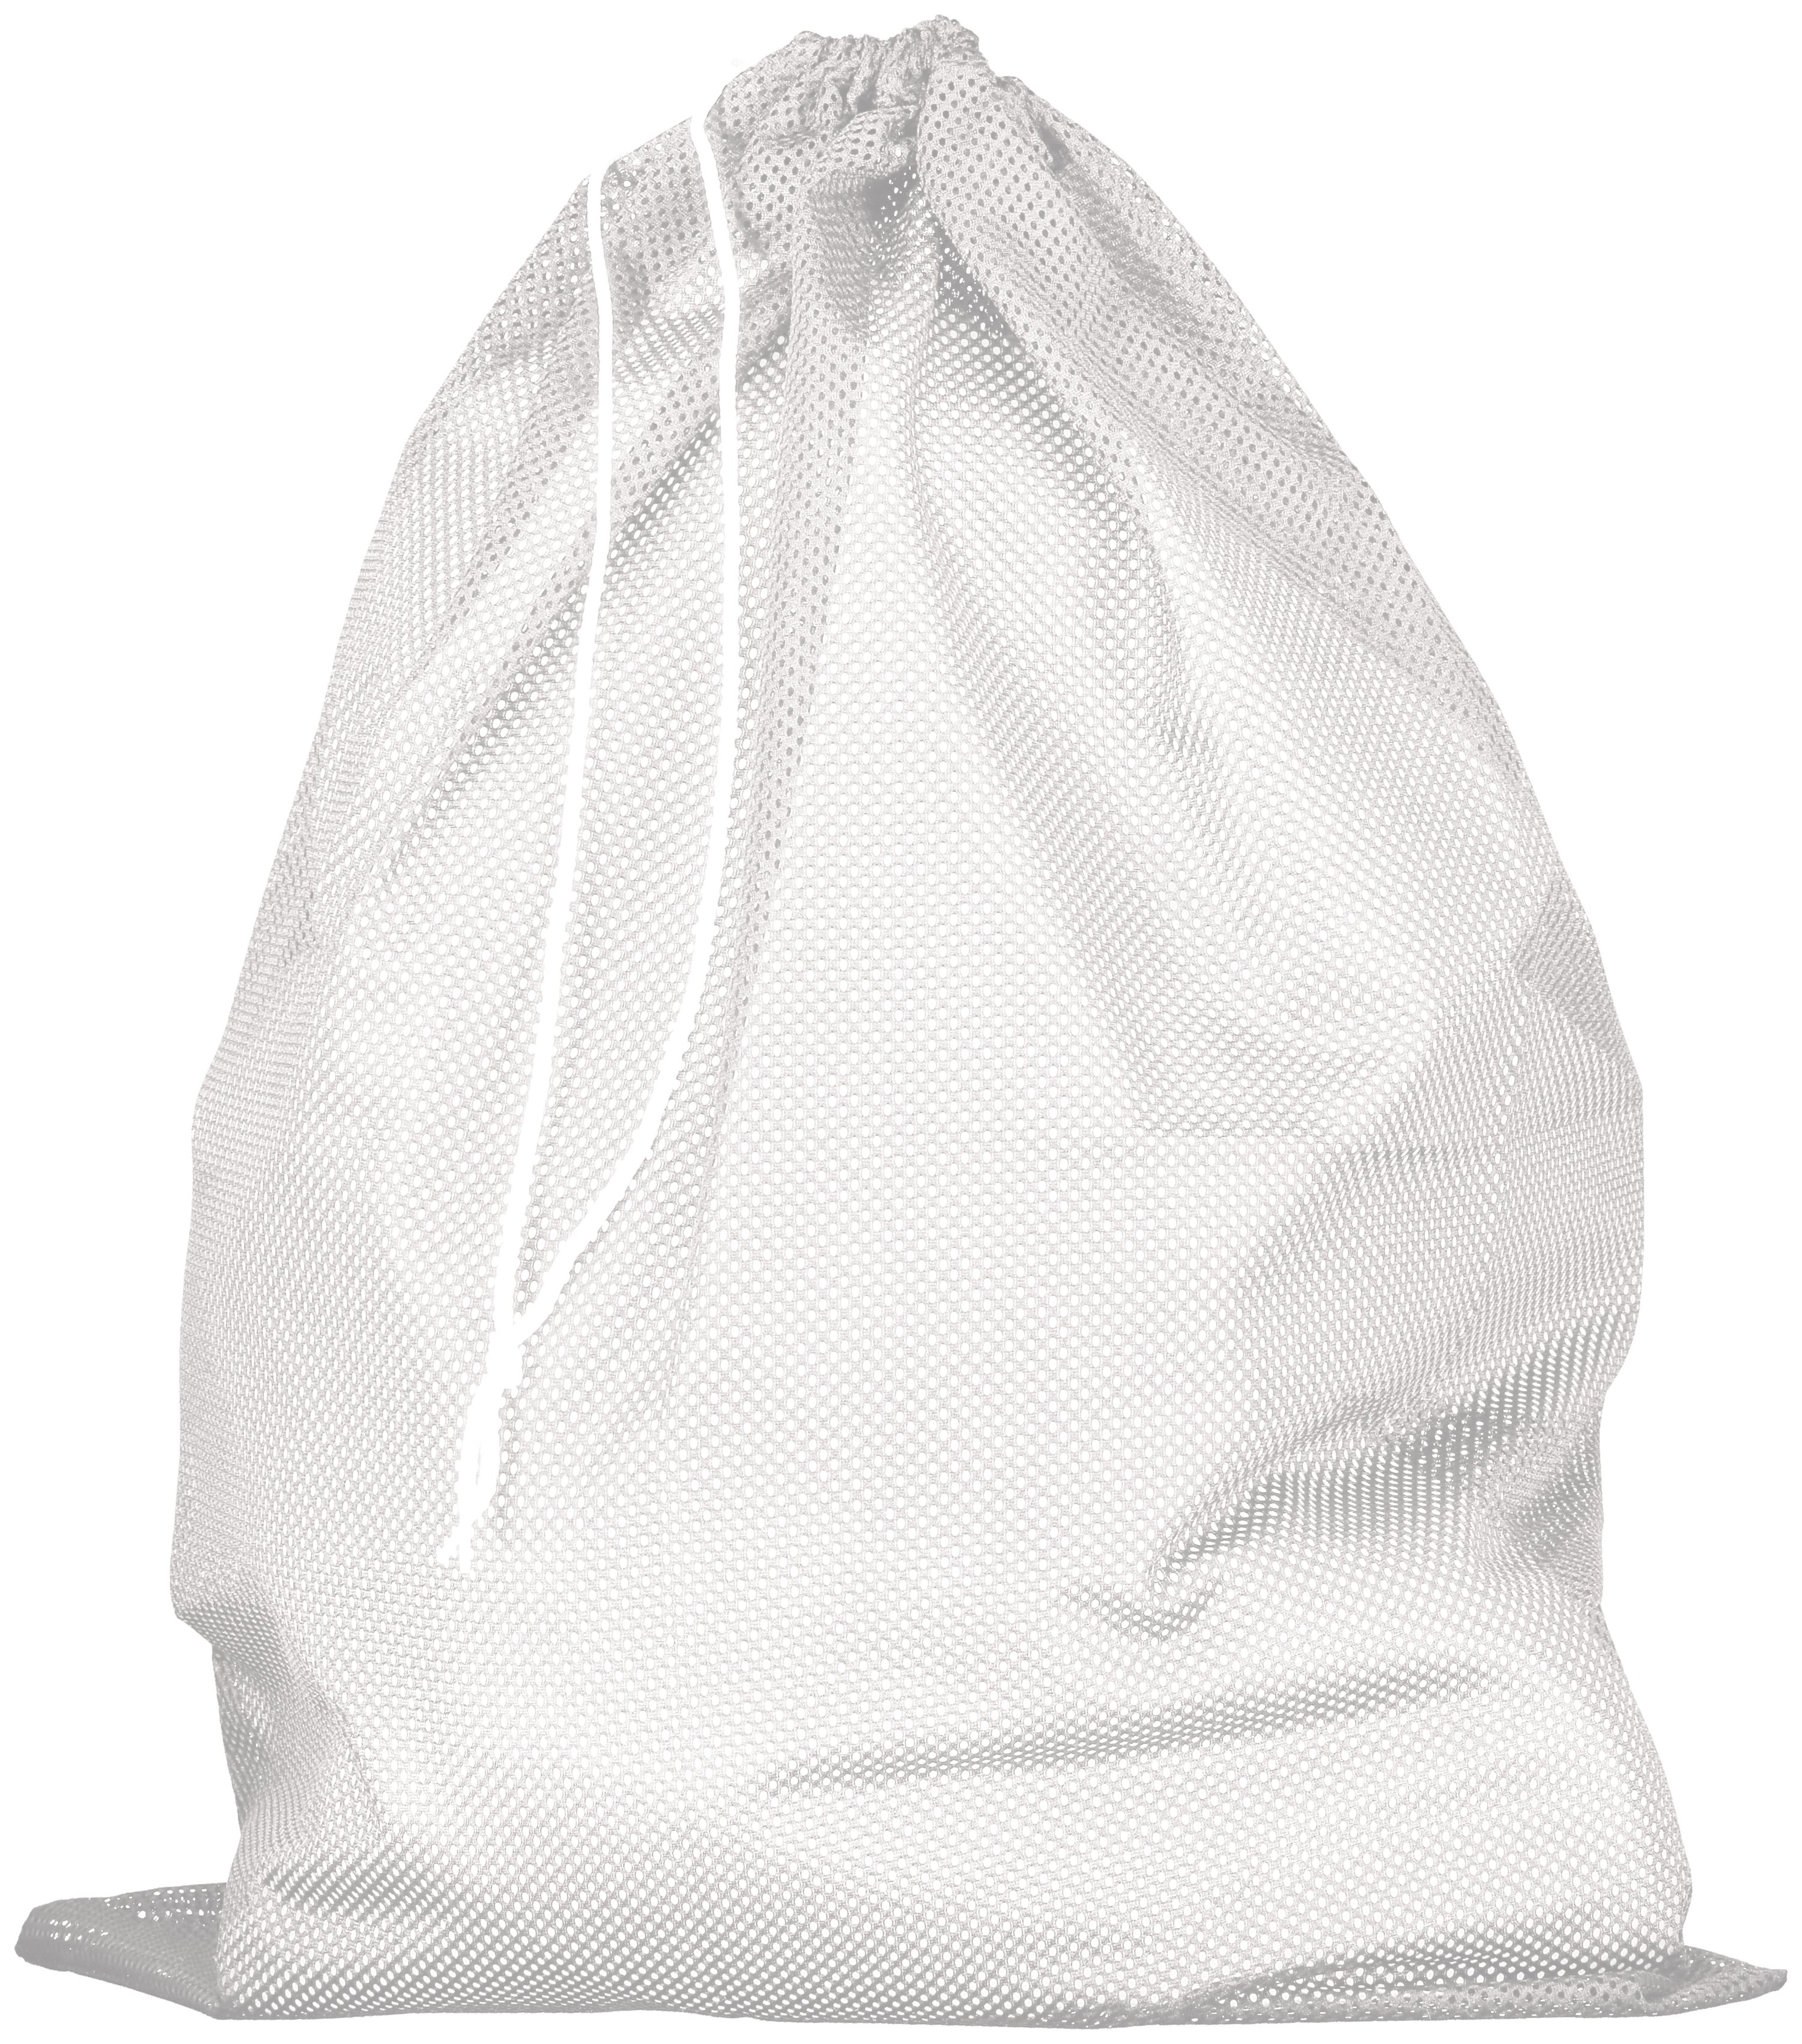 Mesh Laundry Bag - XMARTIAL